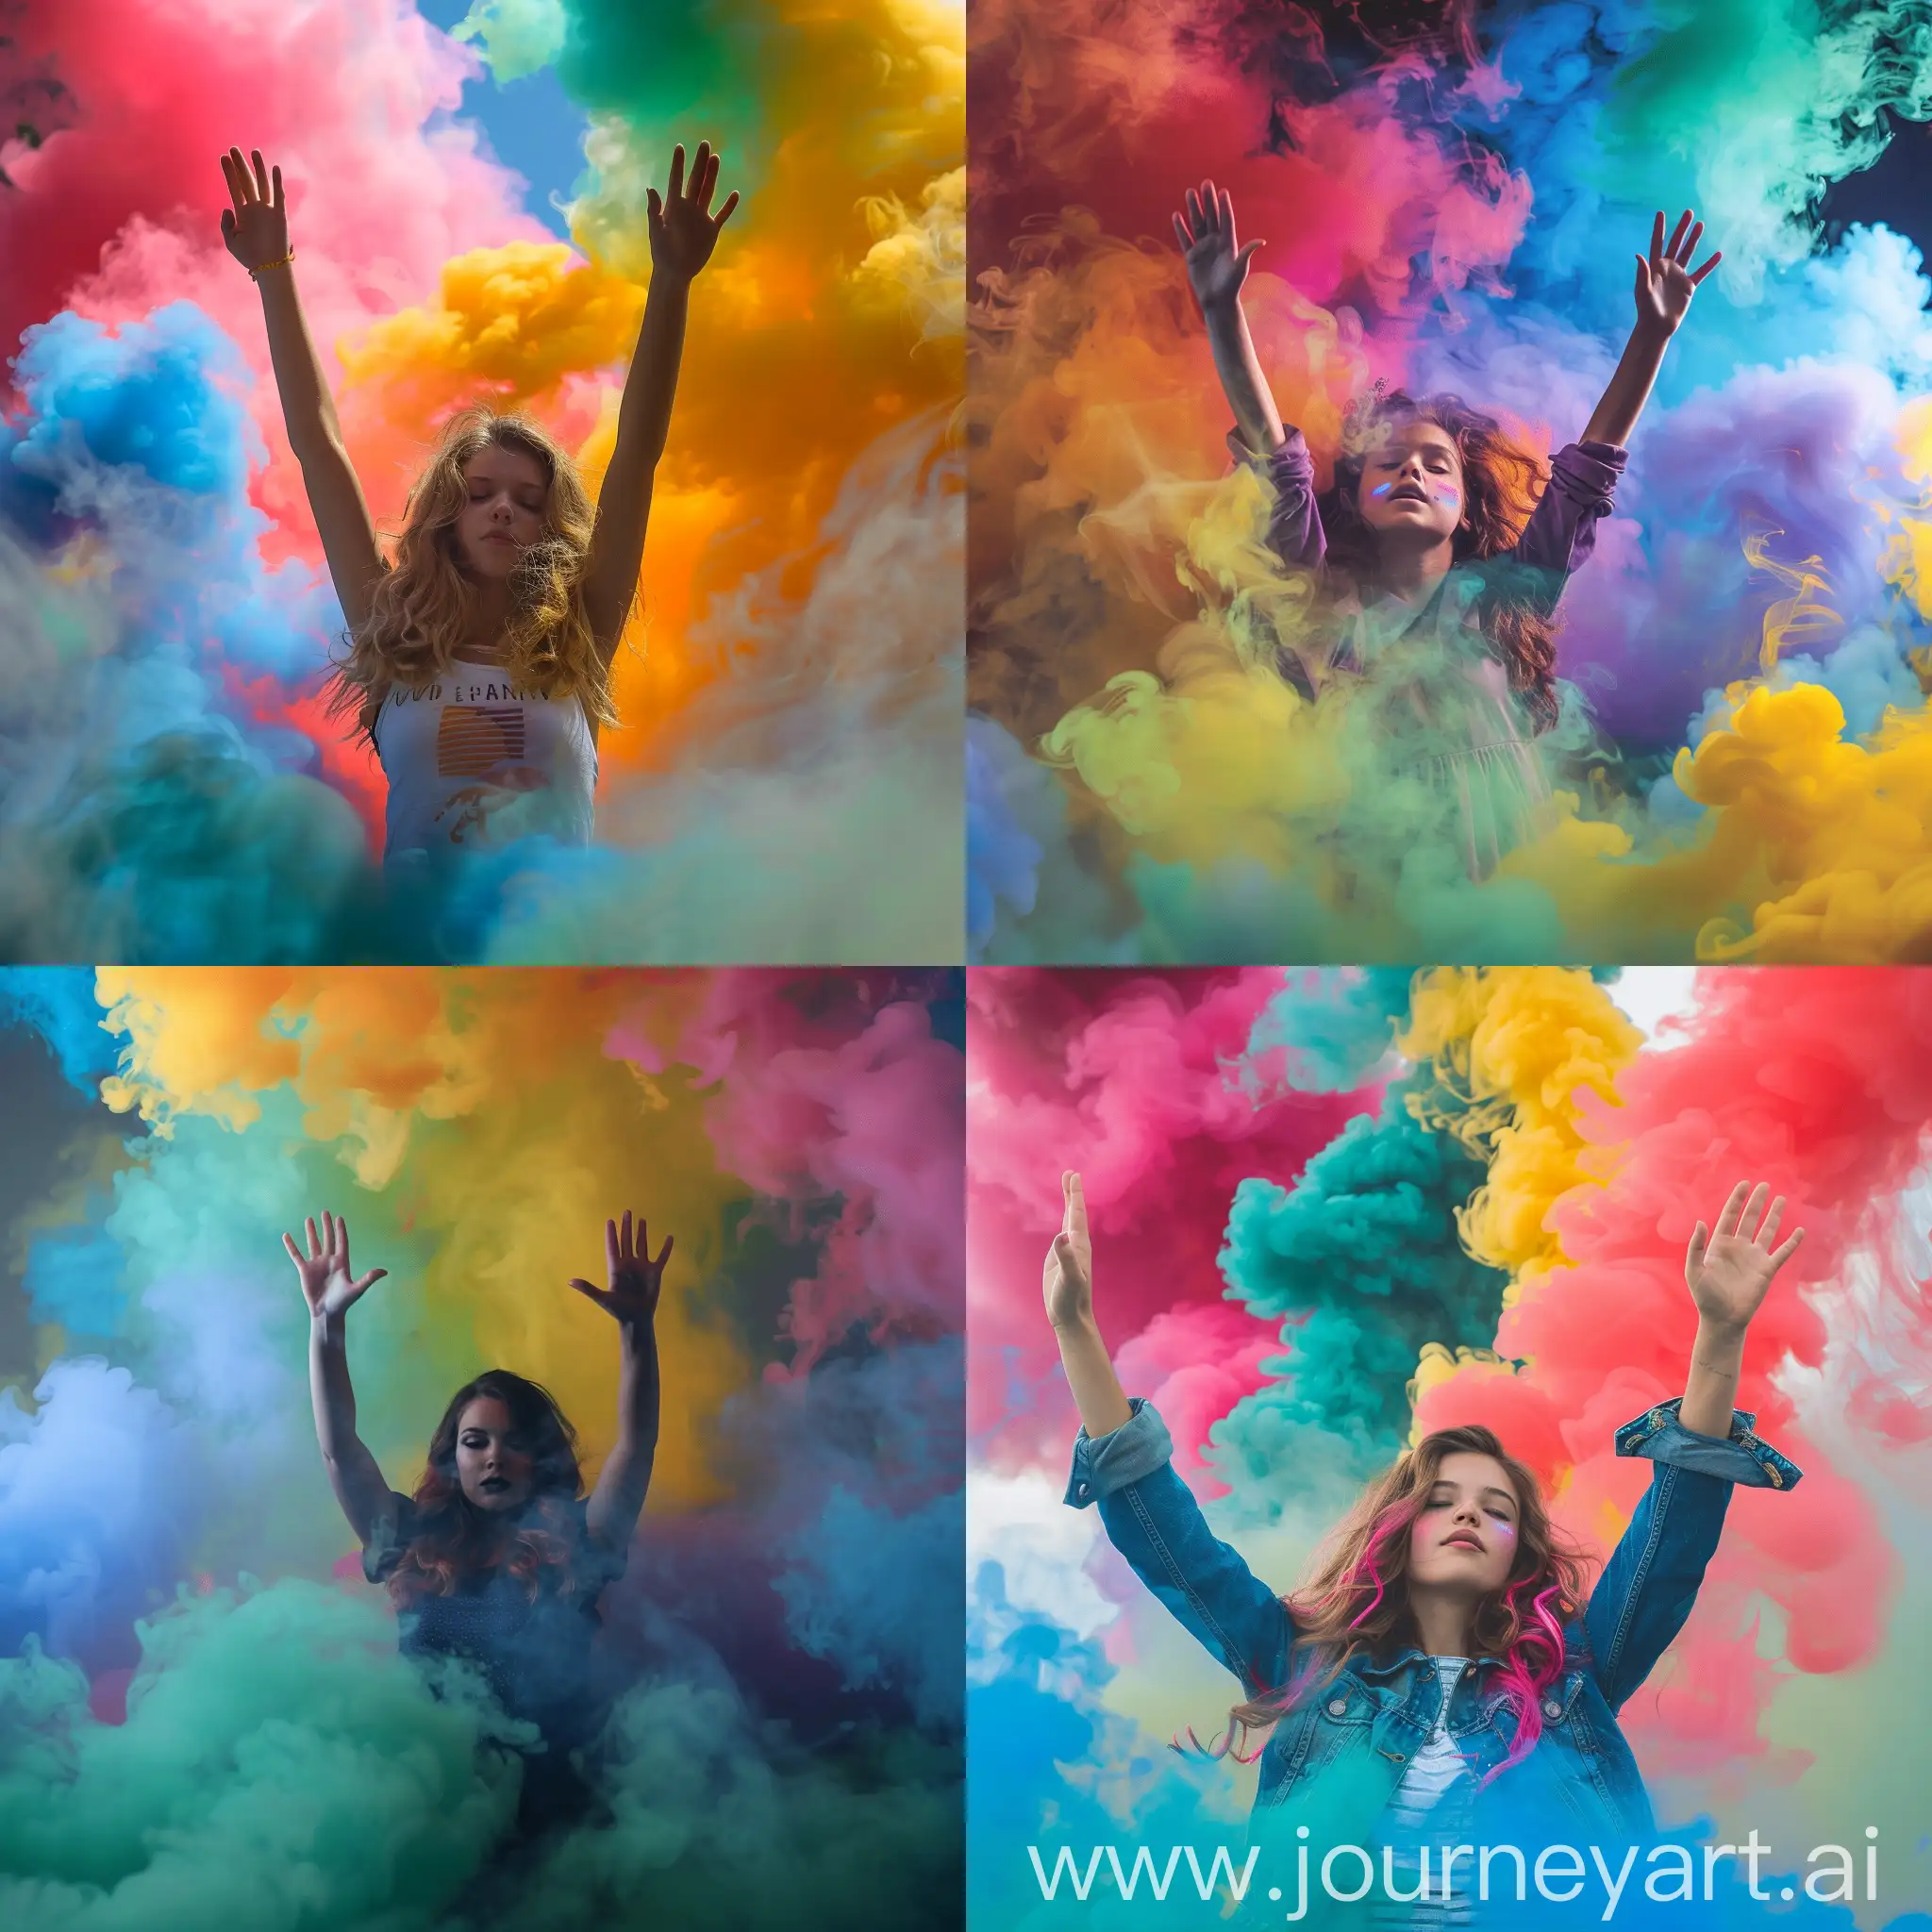 Joyful-Girl-Surrounded-by-Vibrant-Colored-Smoke